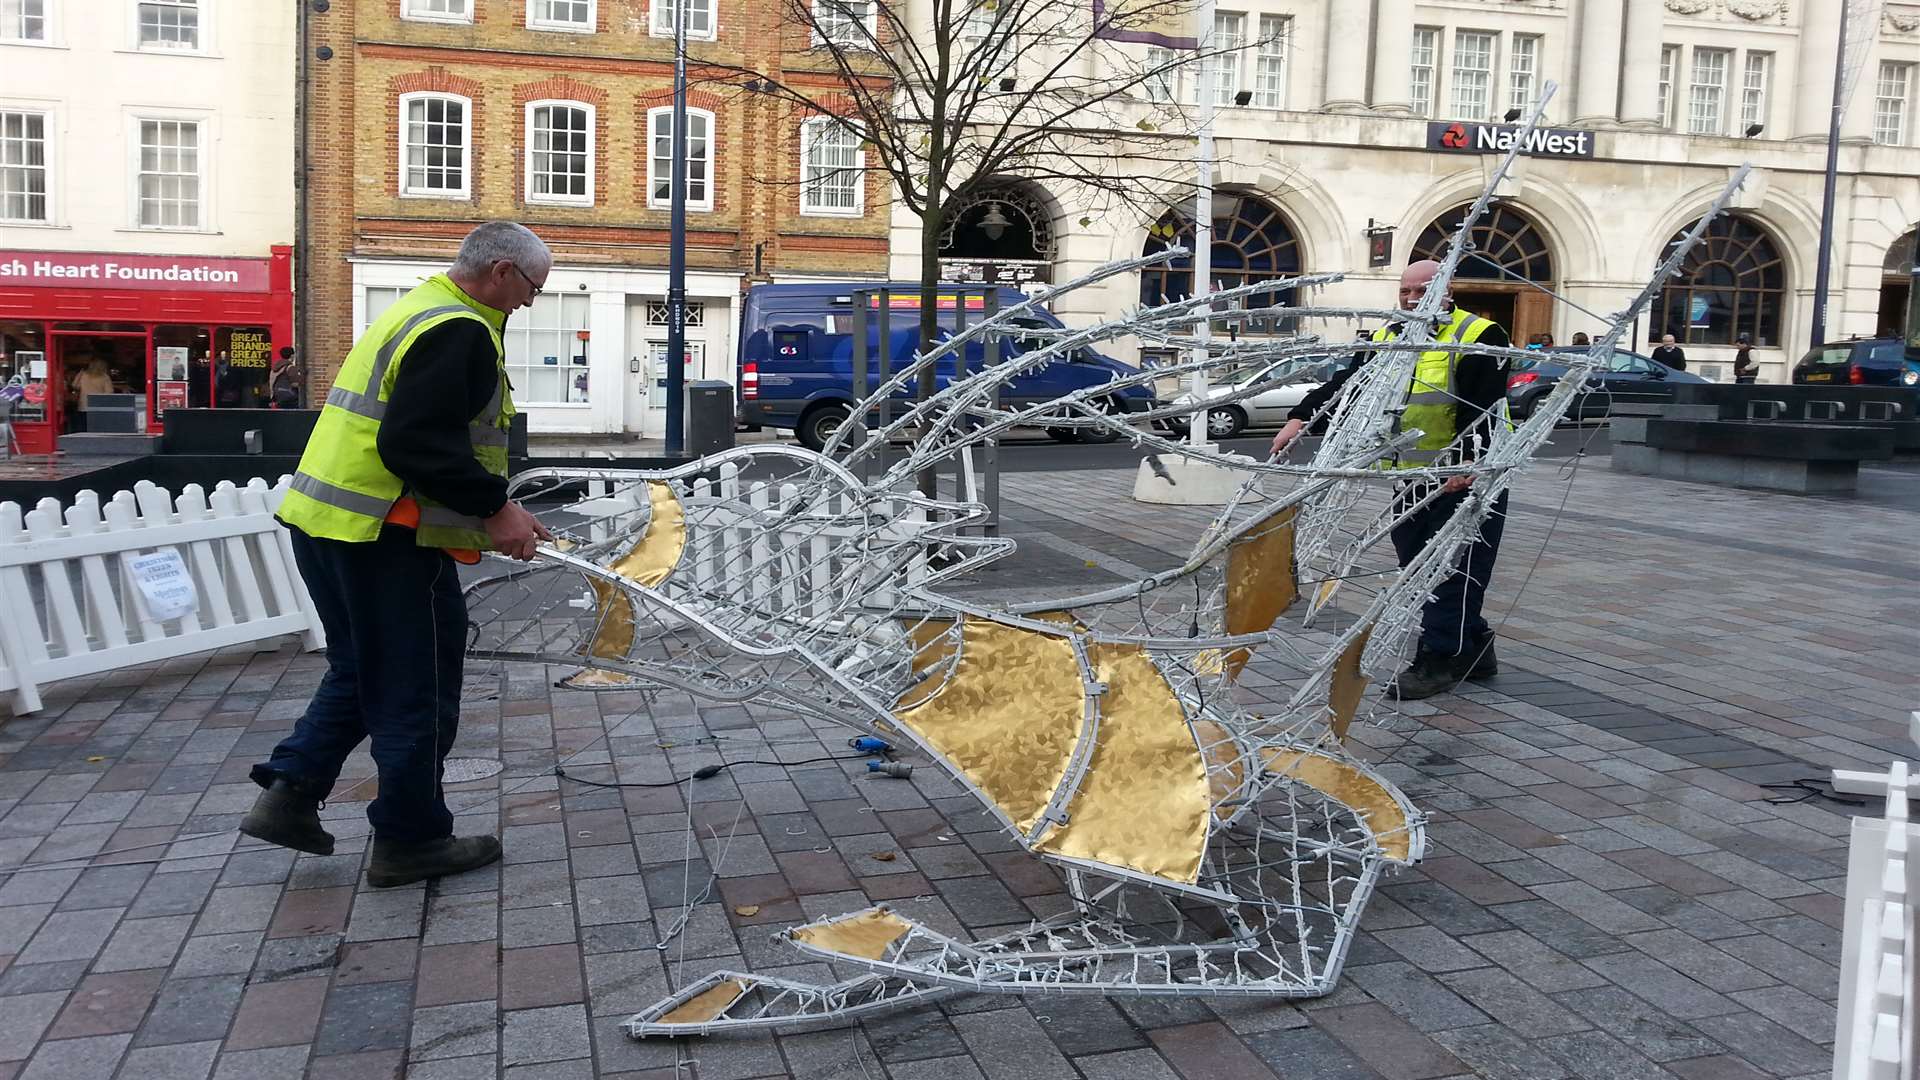 The damaged reindeer is loaded onto a van